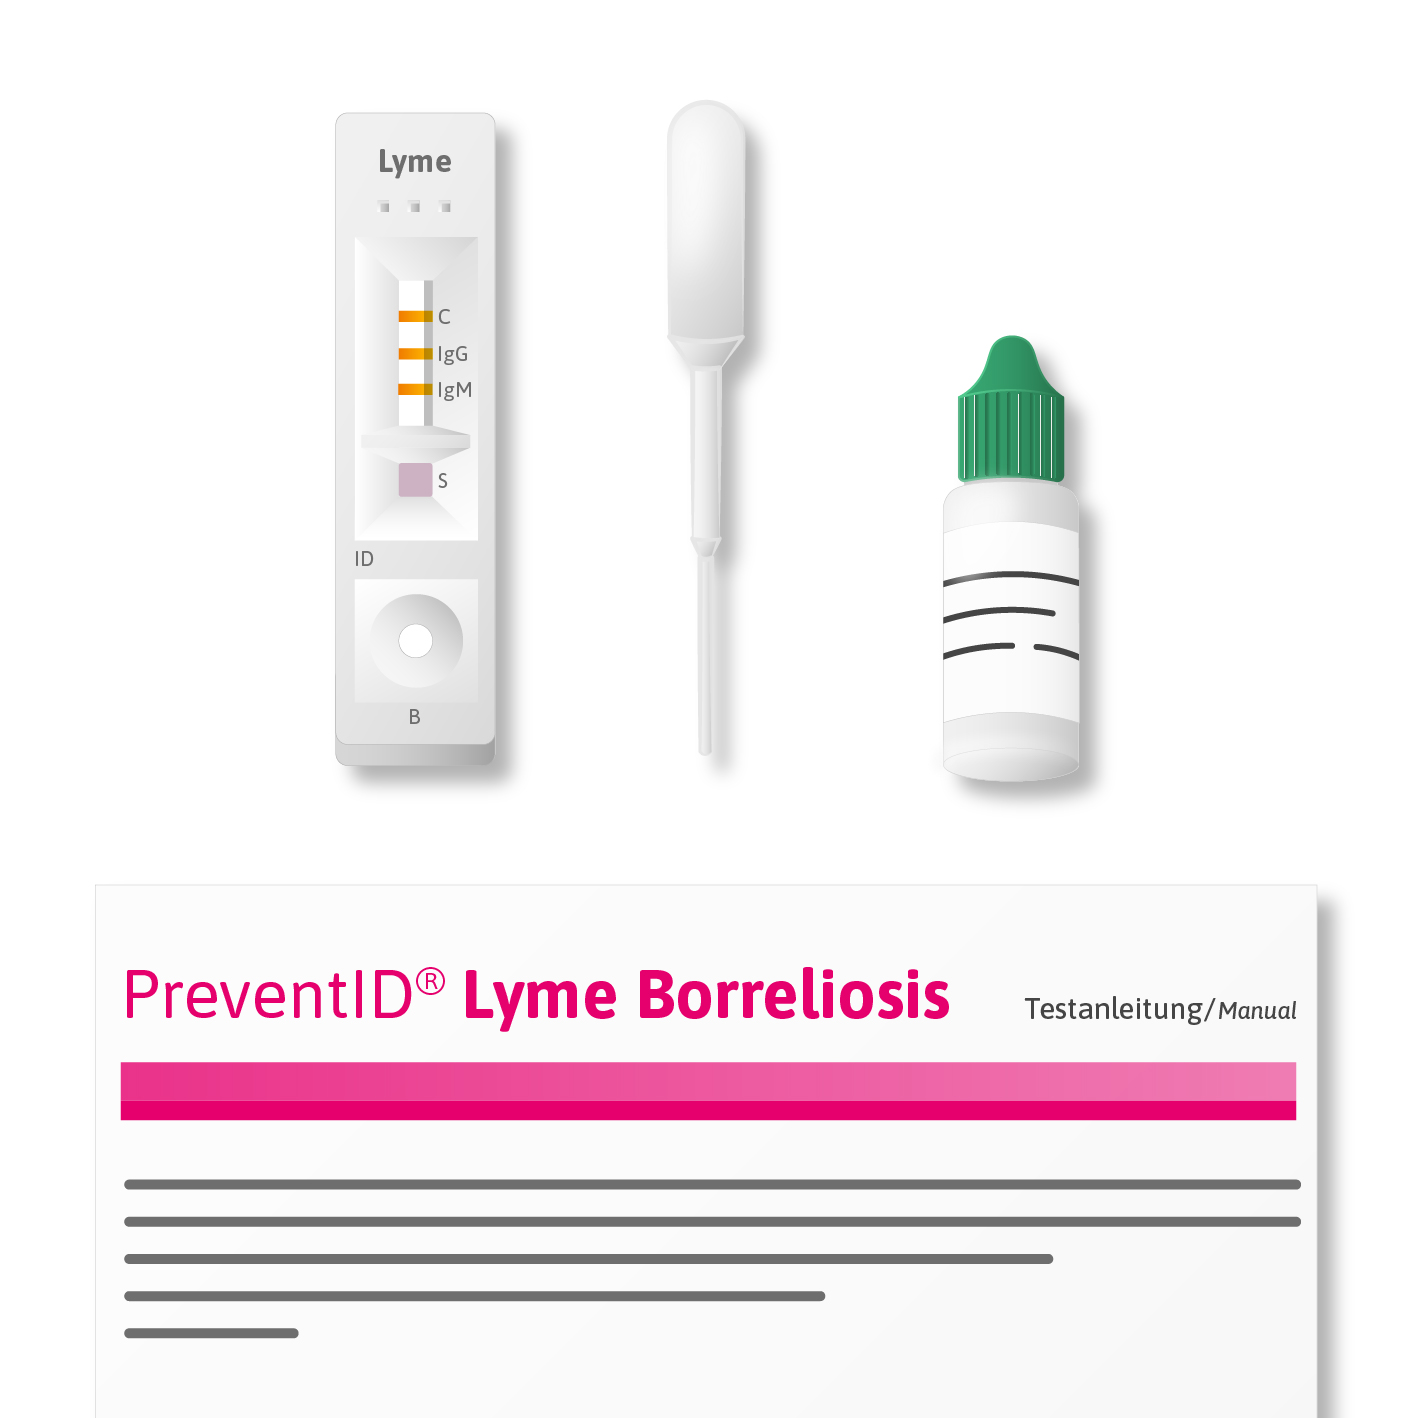 Components PreventID Lyme Borreliosis